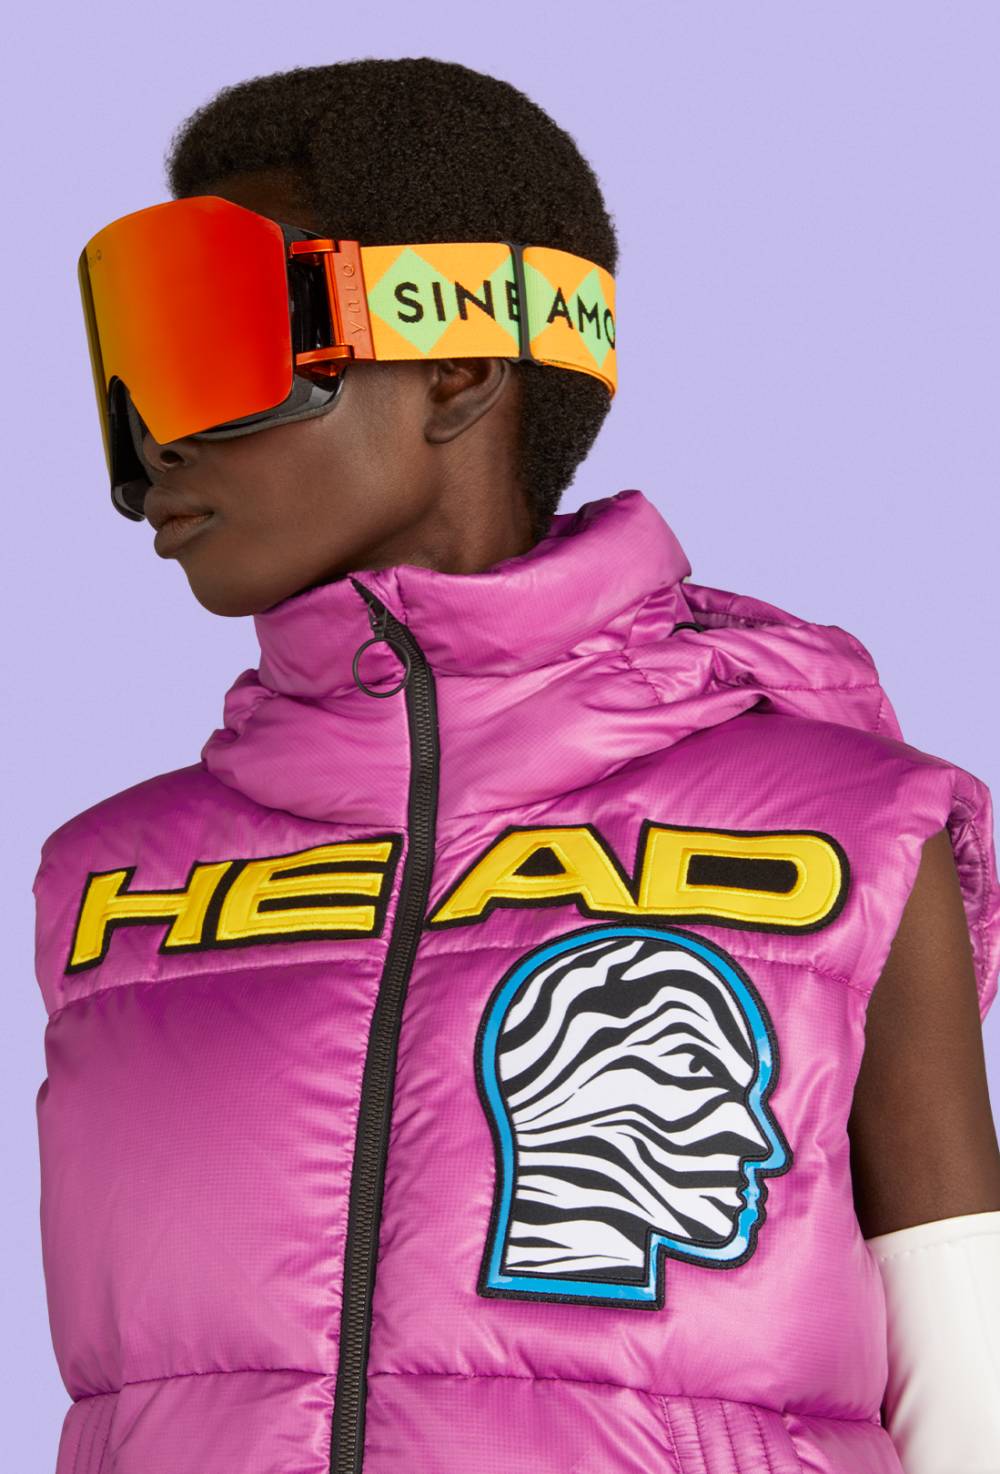 GUCCI TIFFANY jacket by HEAD image #3